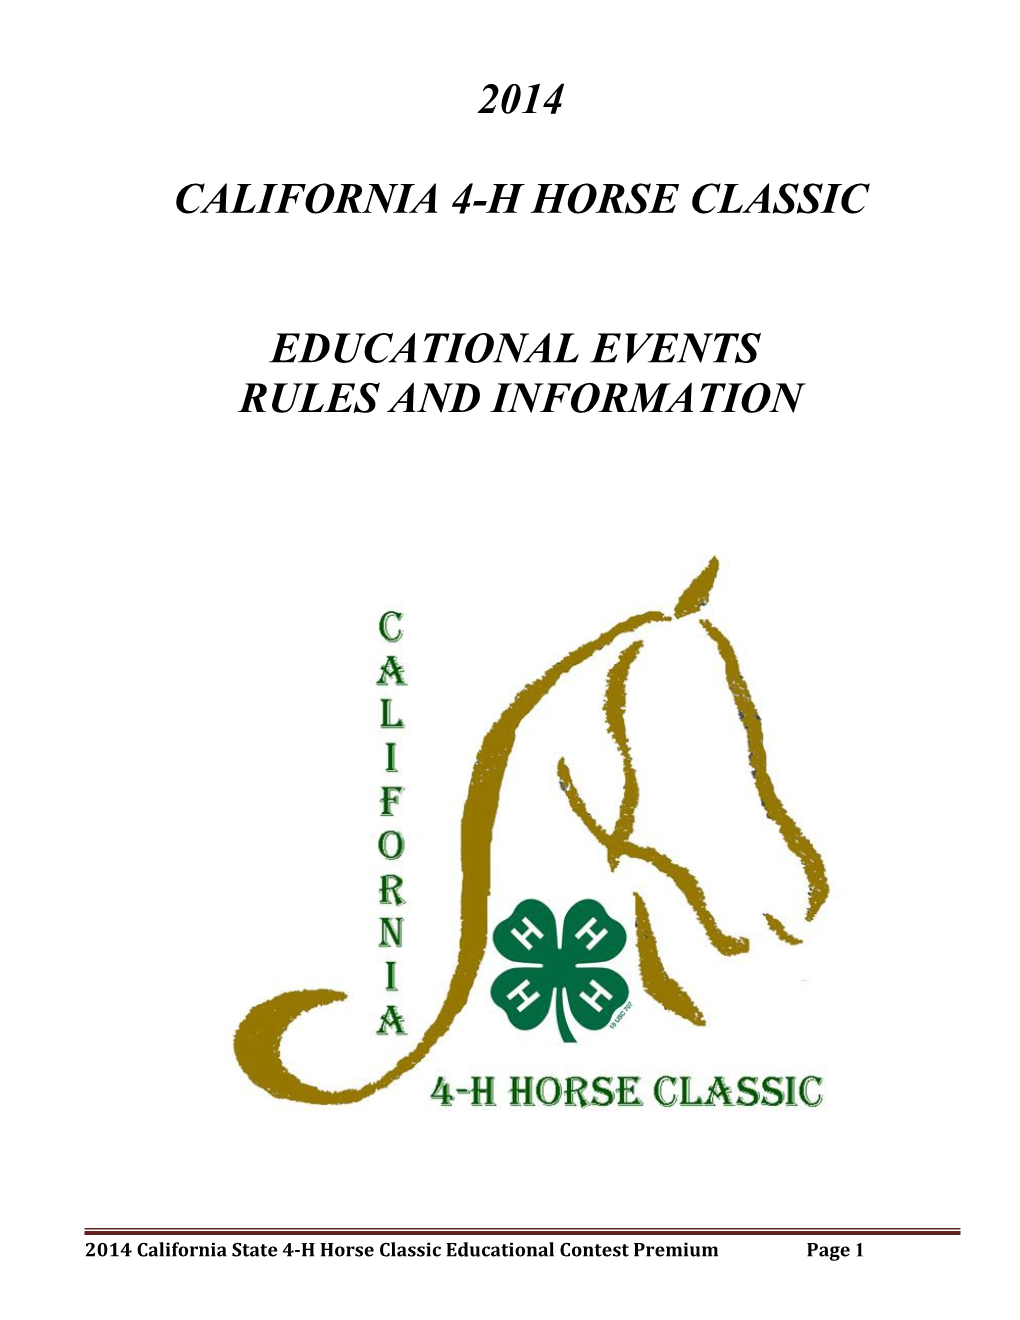 California 4-H Horse Classic